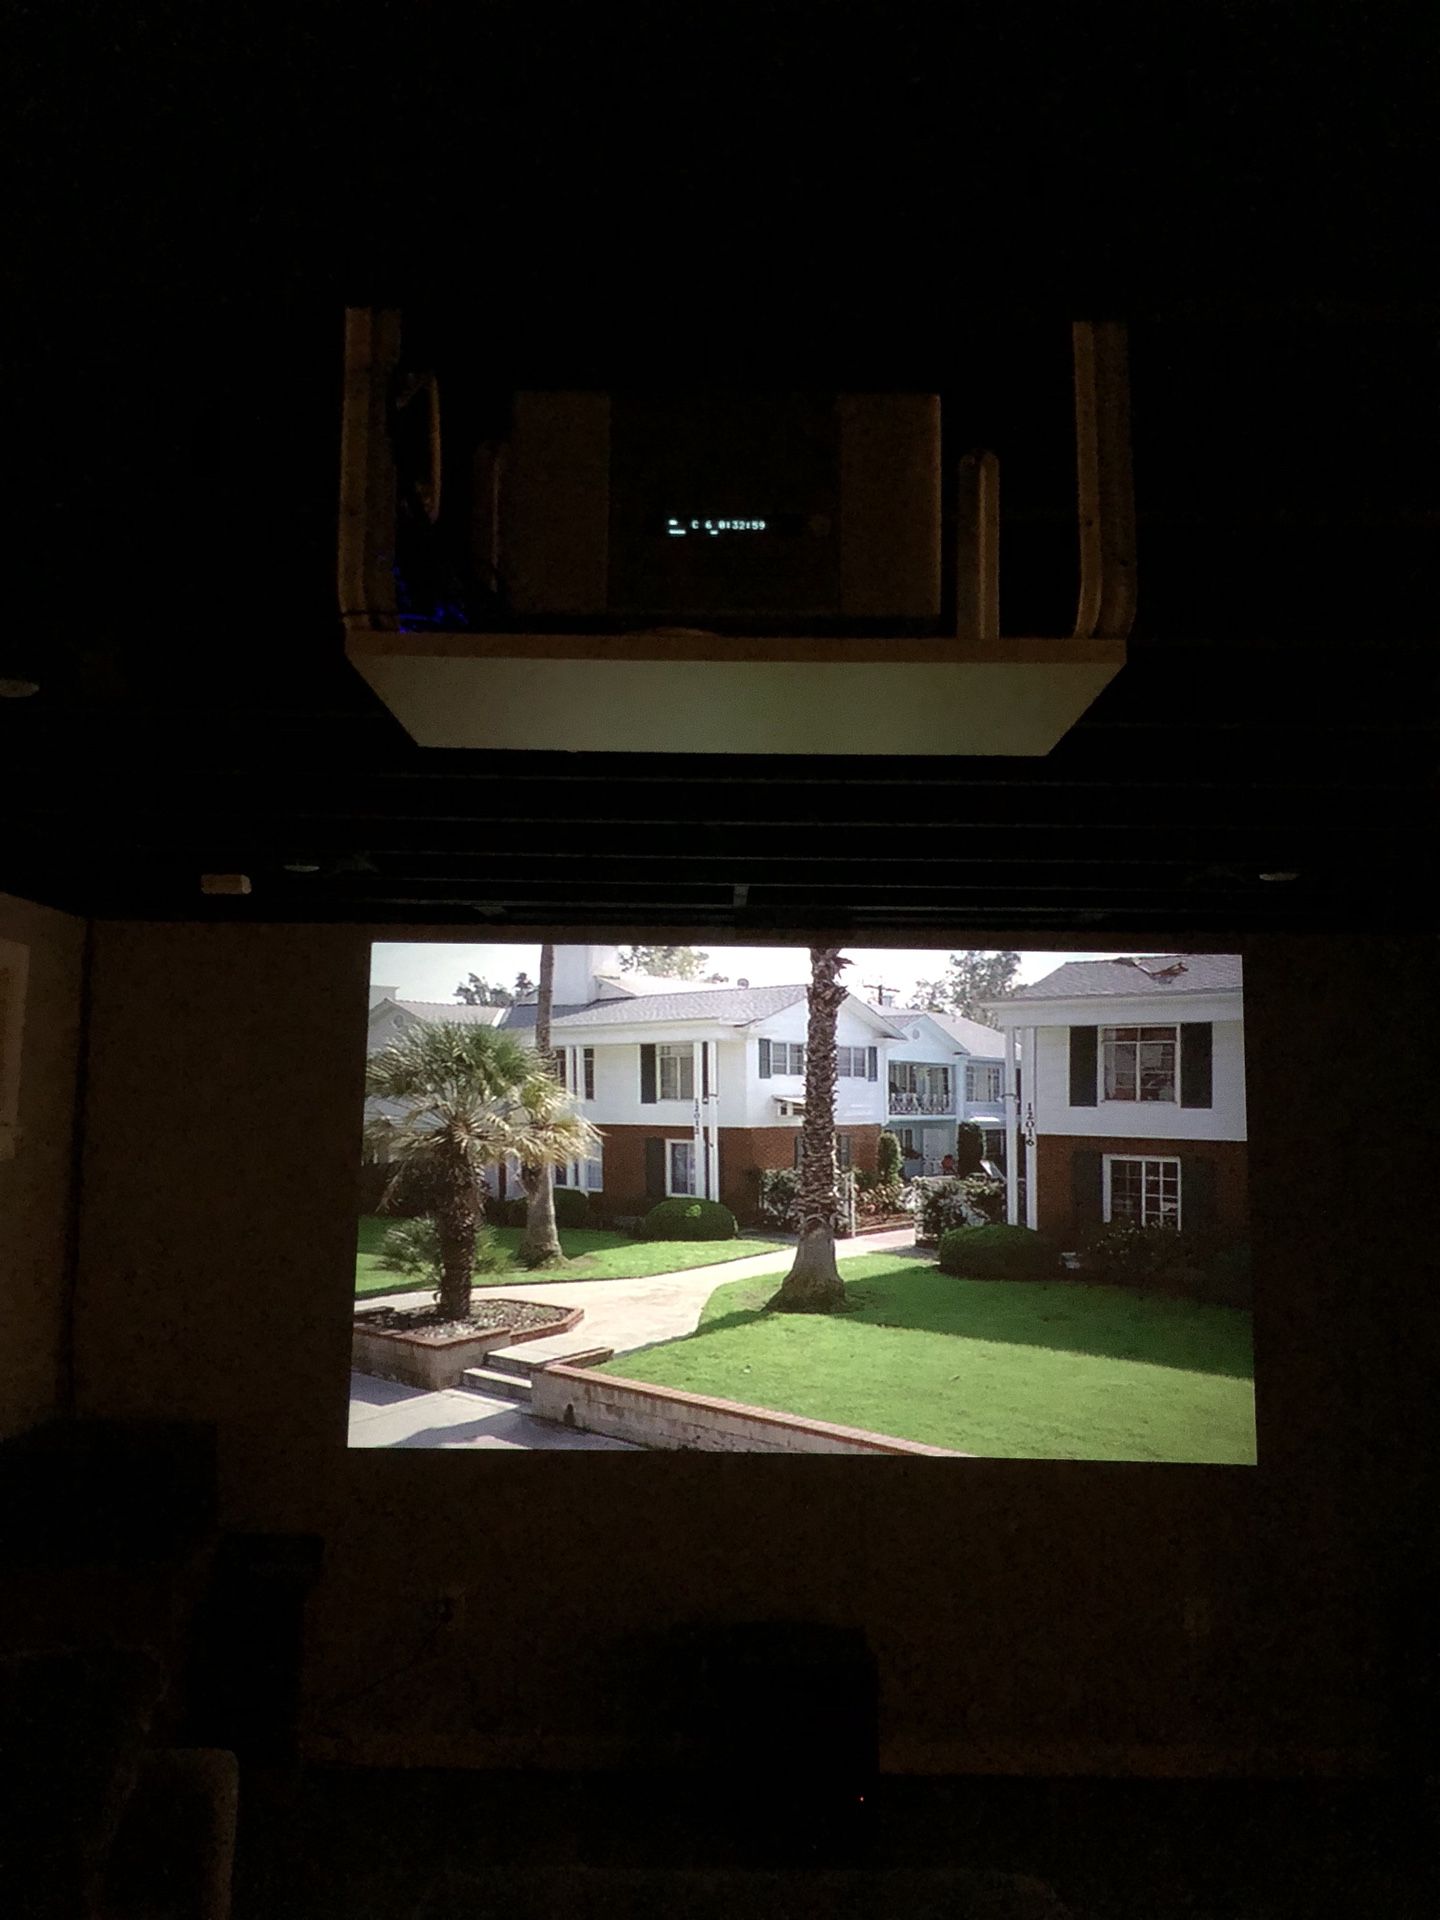 Epson MovieMate movie projector